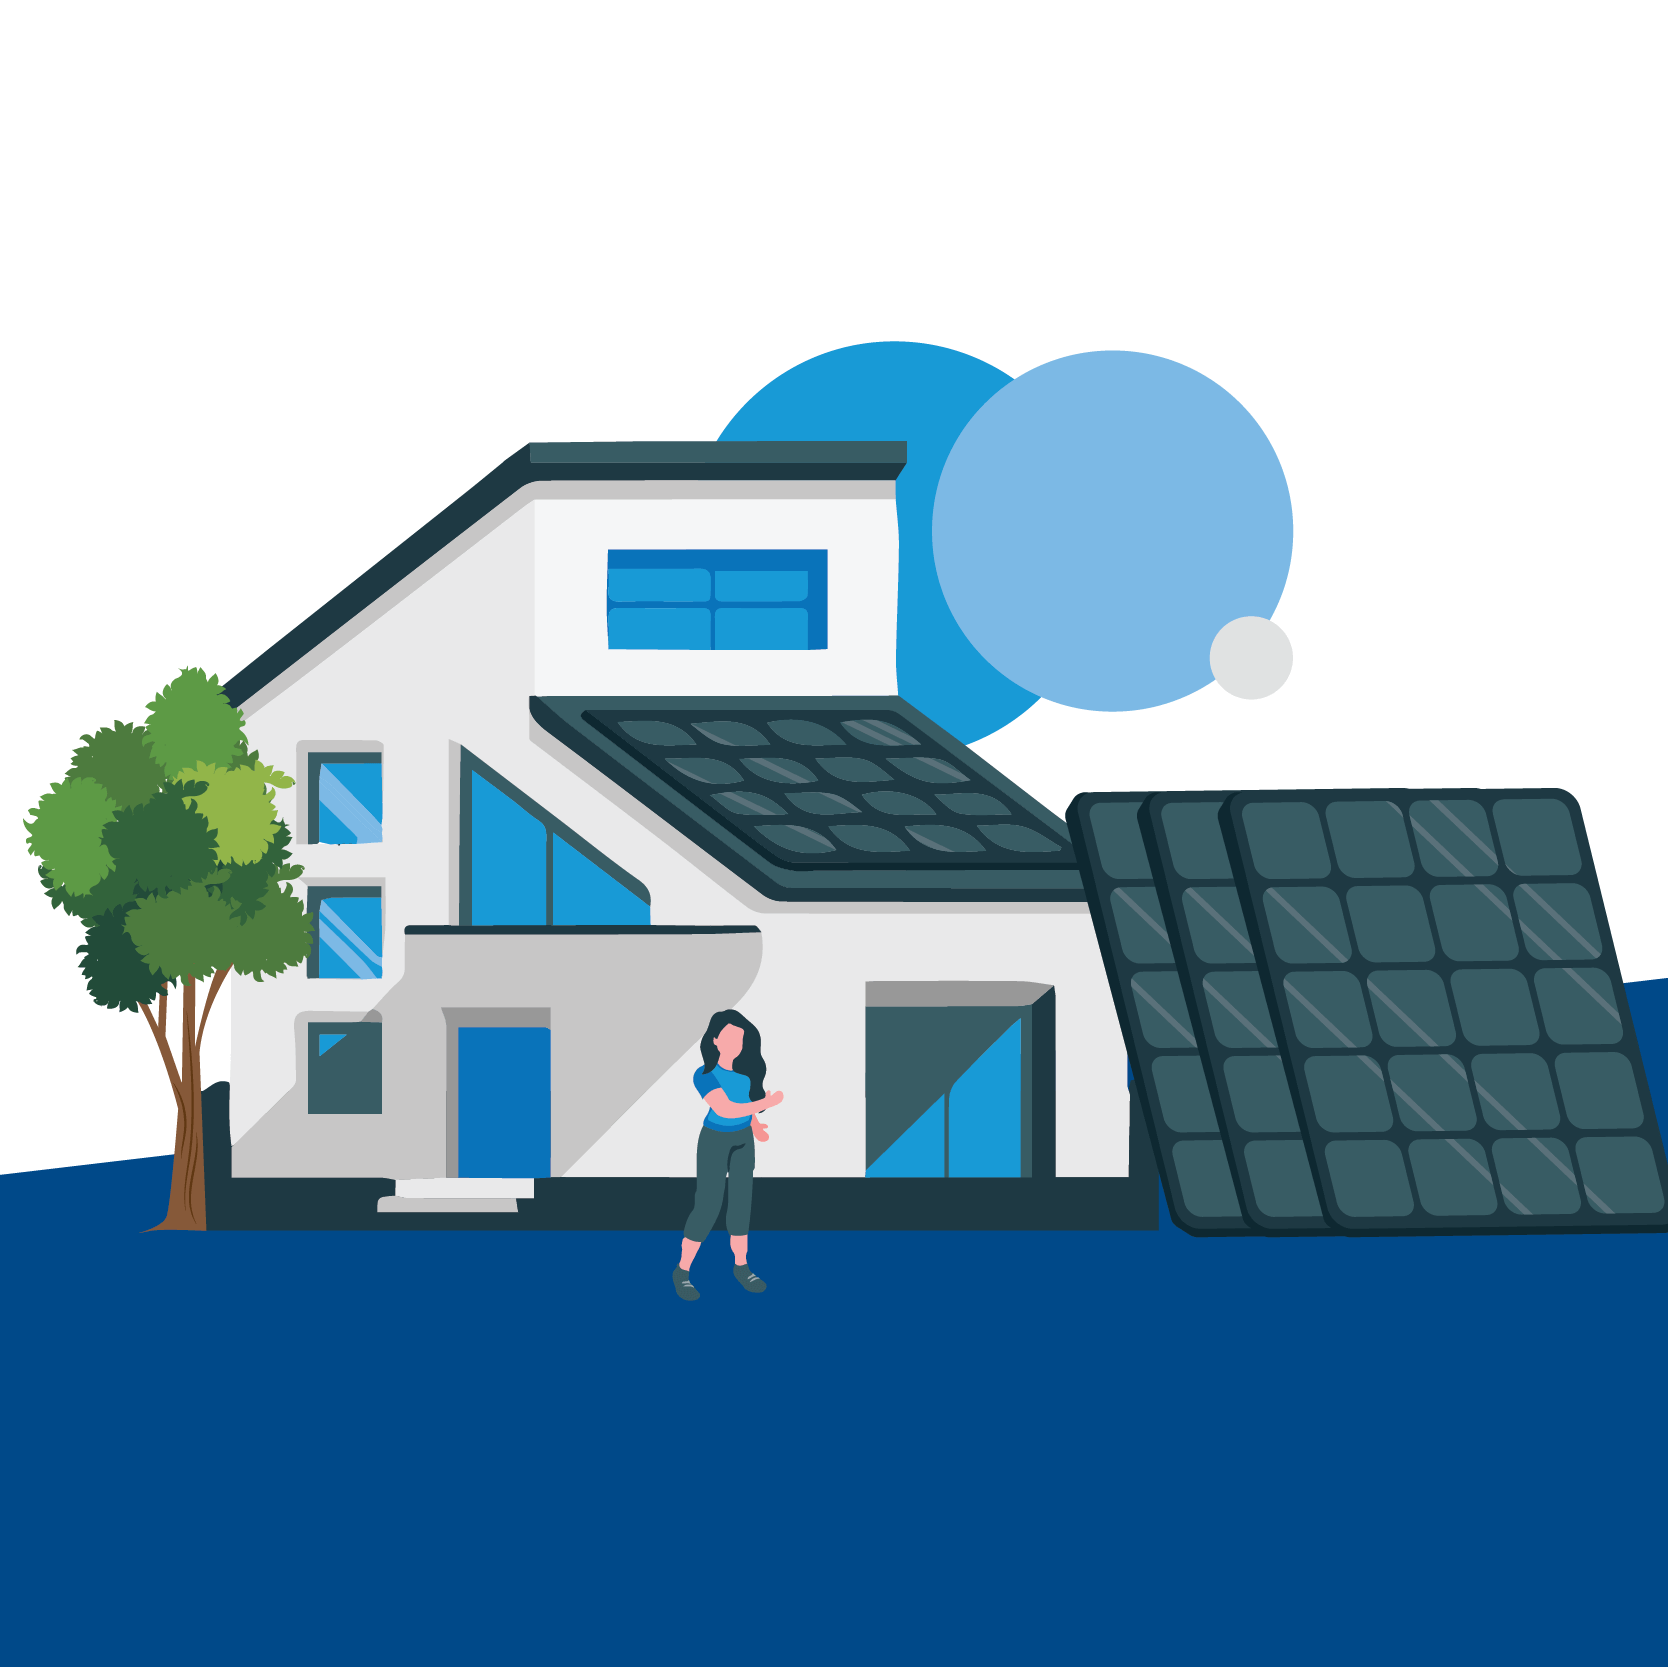 Modern house with solar panels illustration